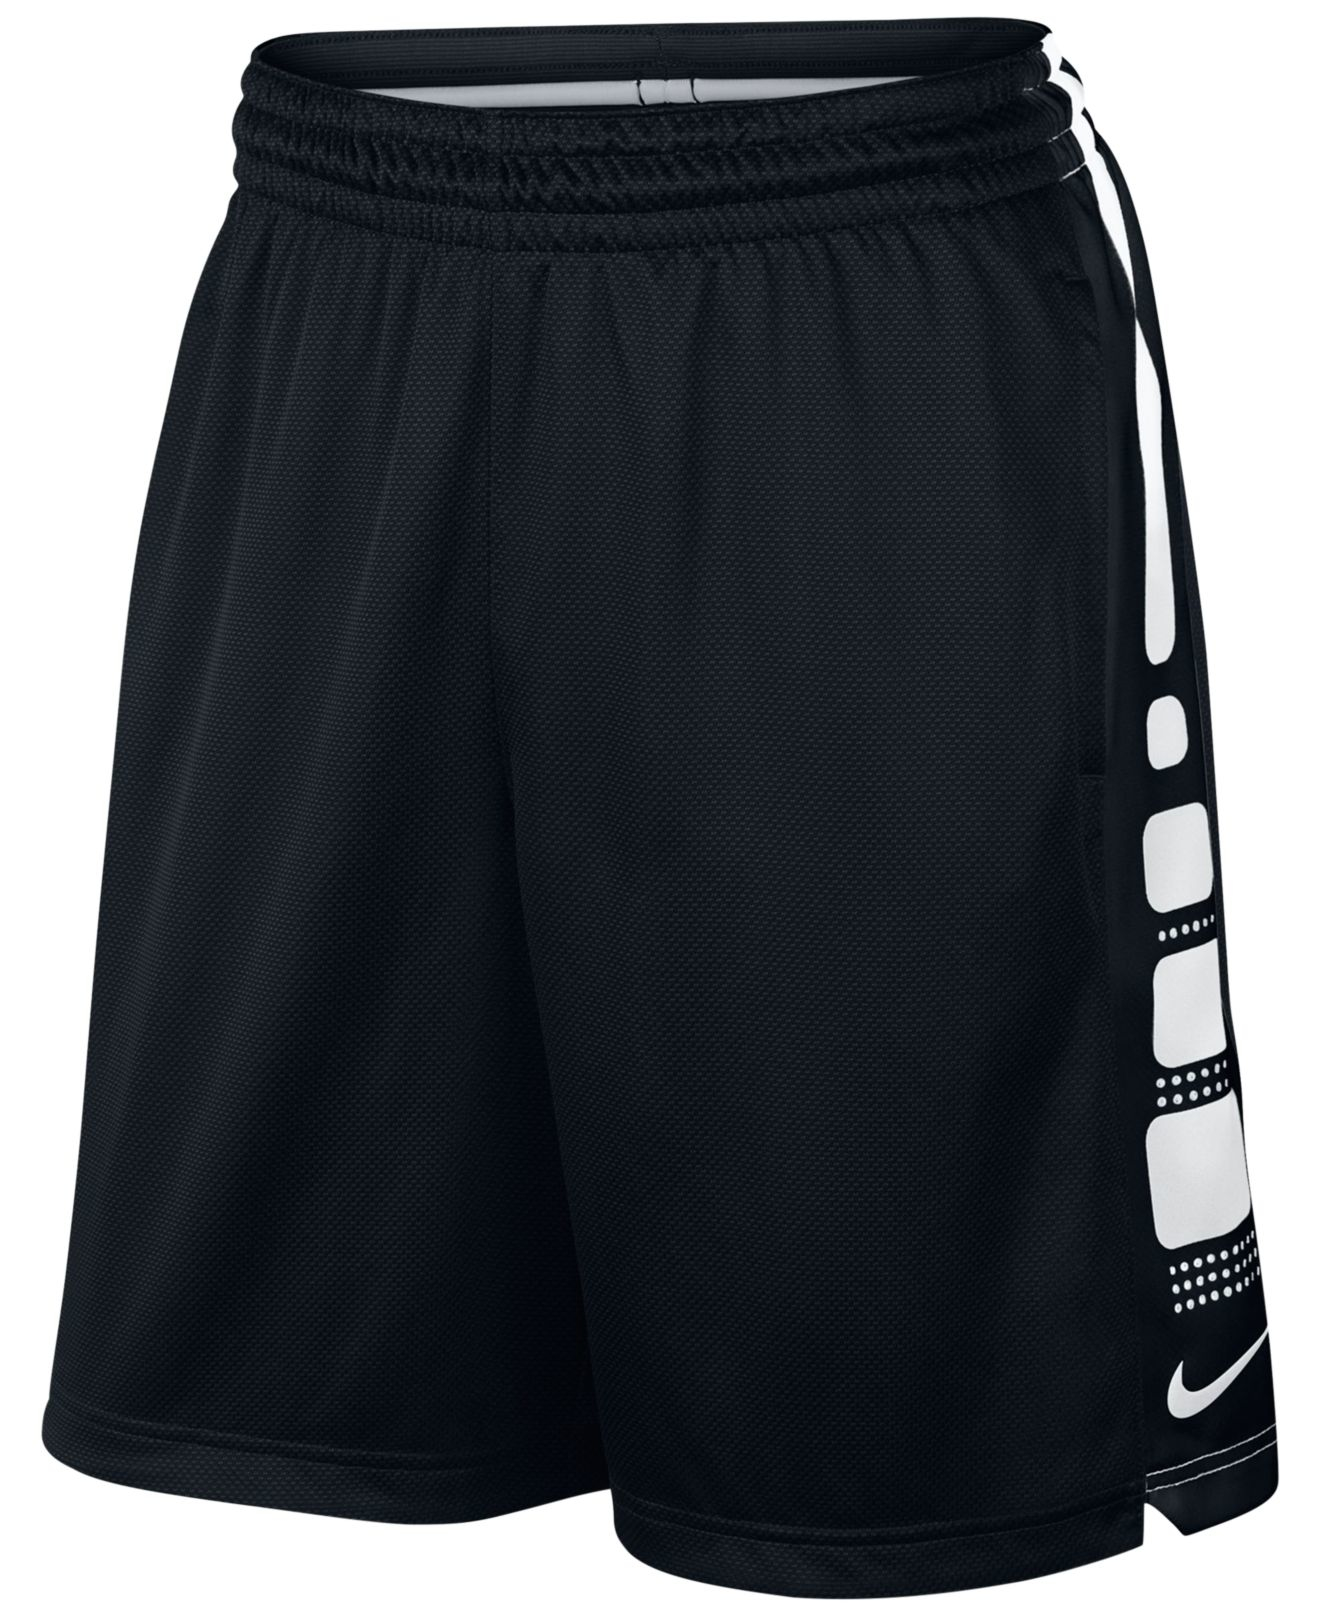 Nike Synthetic Elite Dri-fit Basketball Shorts in Black/White (Black ...